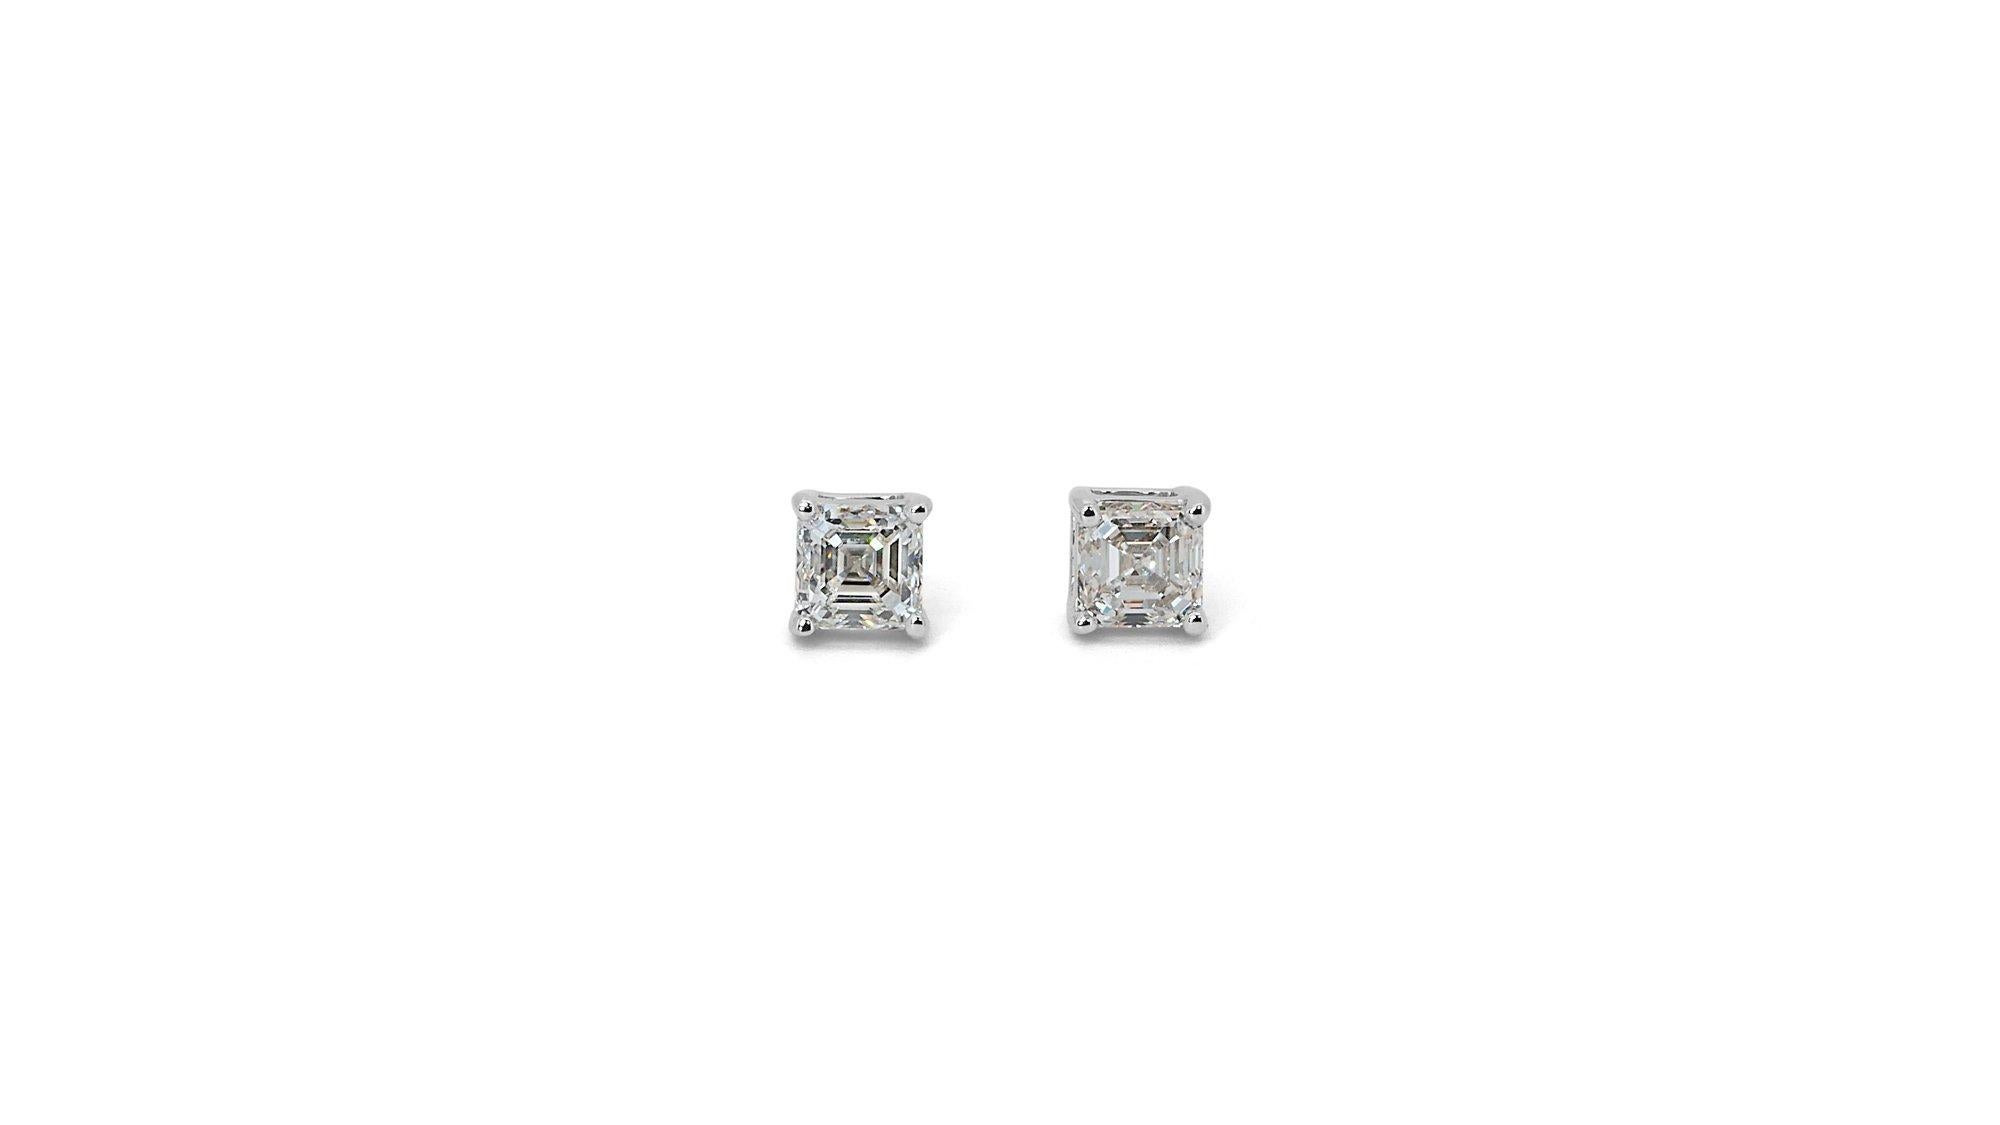 Beautiful pair of stud earrings with a dazzling 1.3 carat Asscher cut diamonds 5